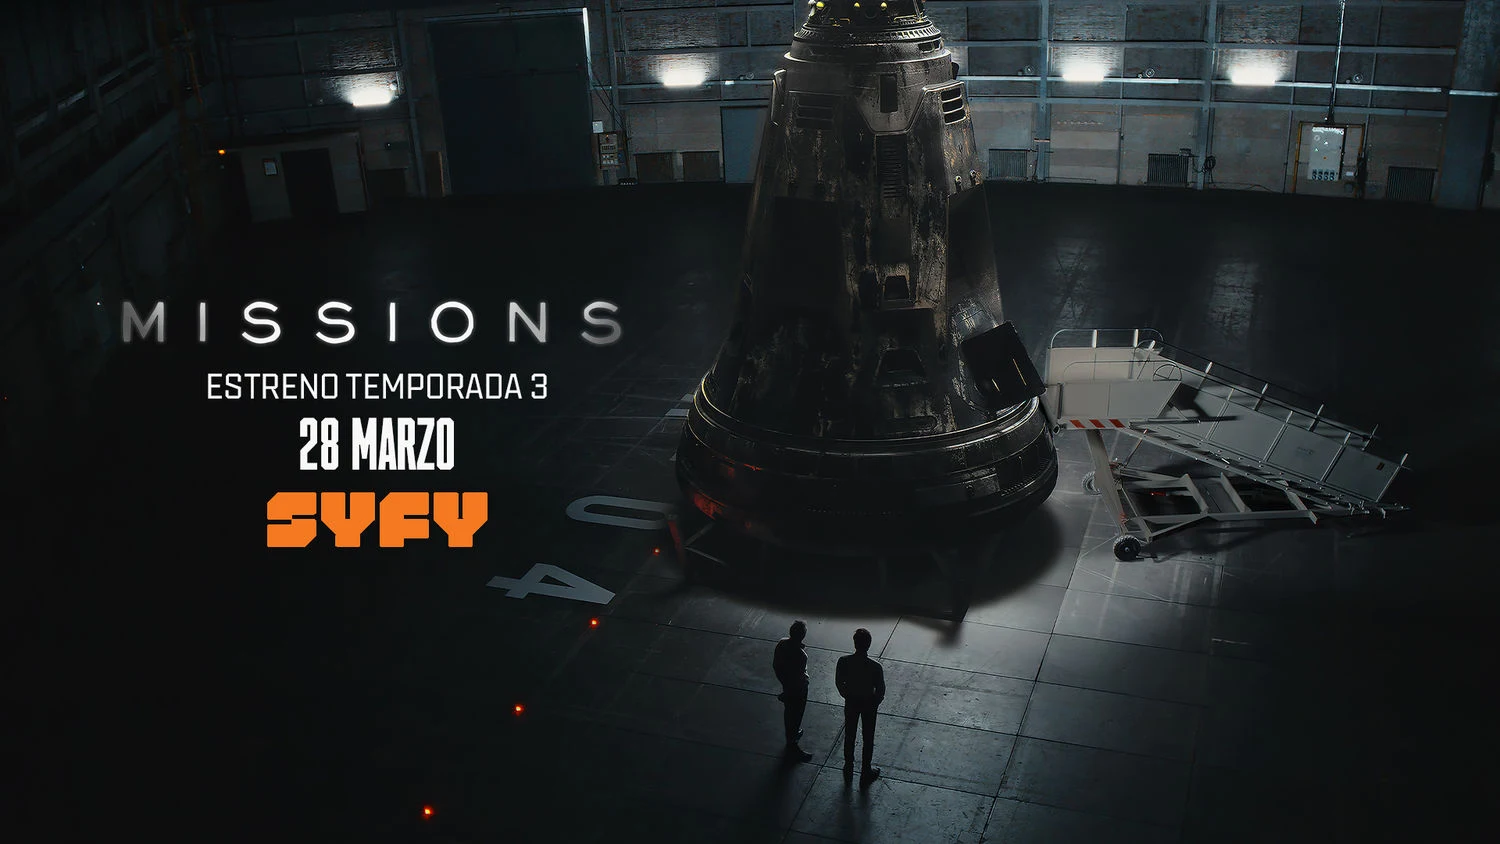 Imagen Missions Temporada 3